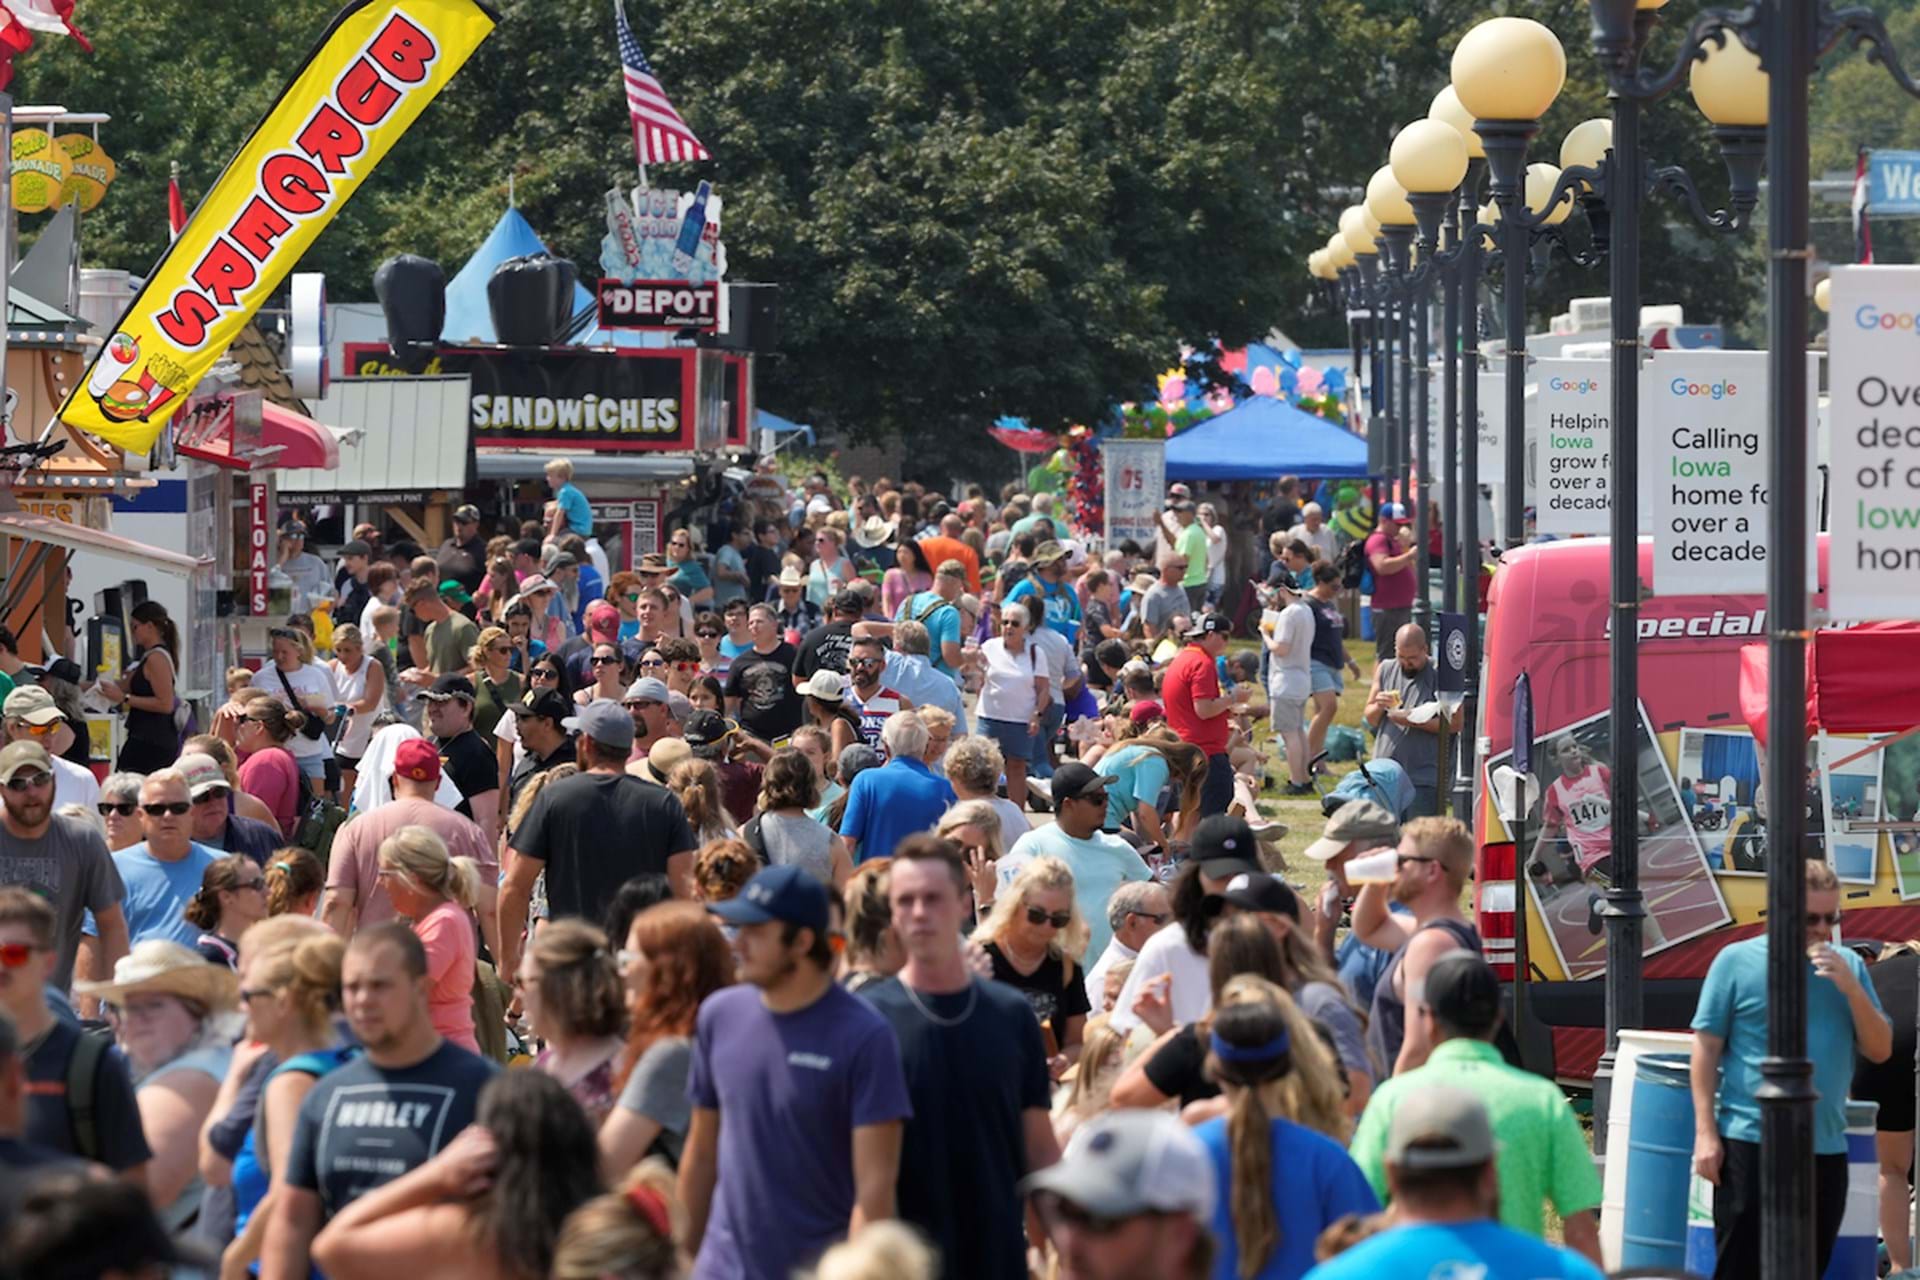 Crowds at the Iowa State Fair